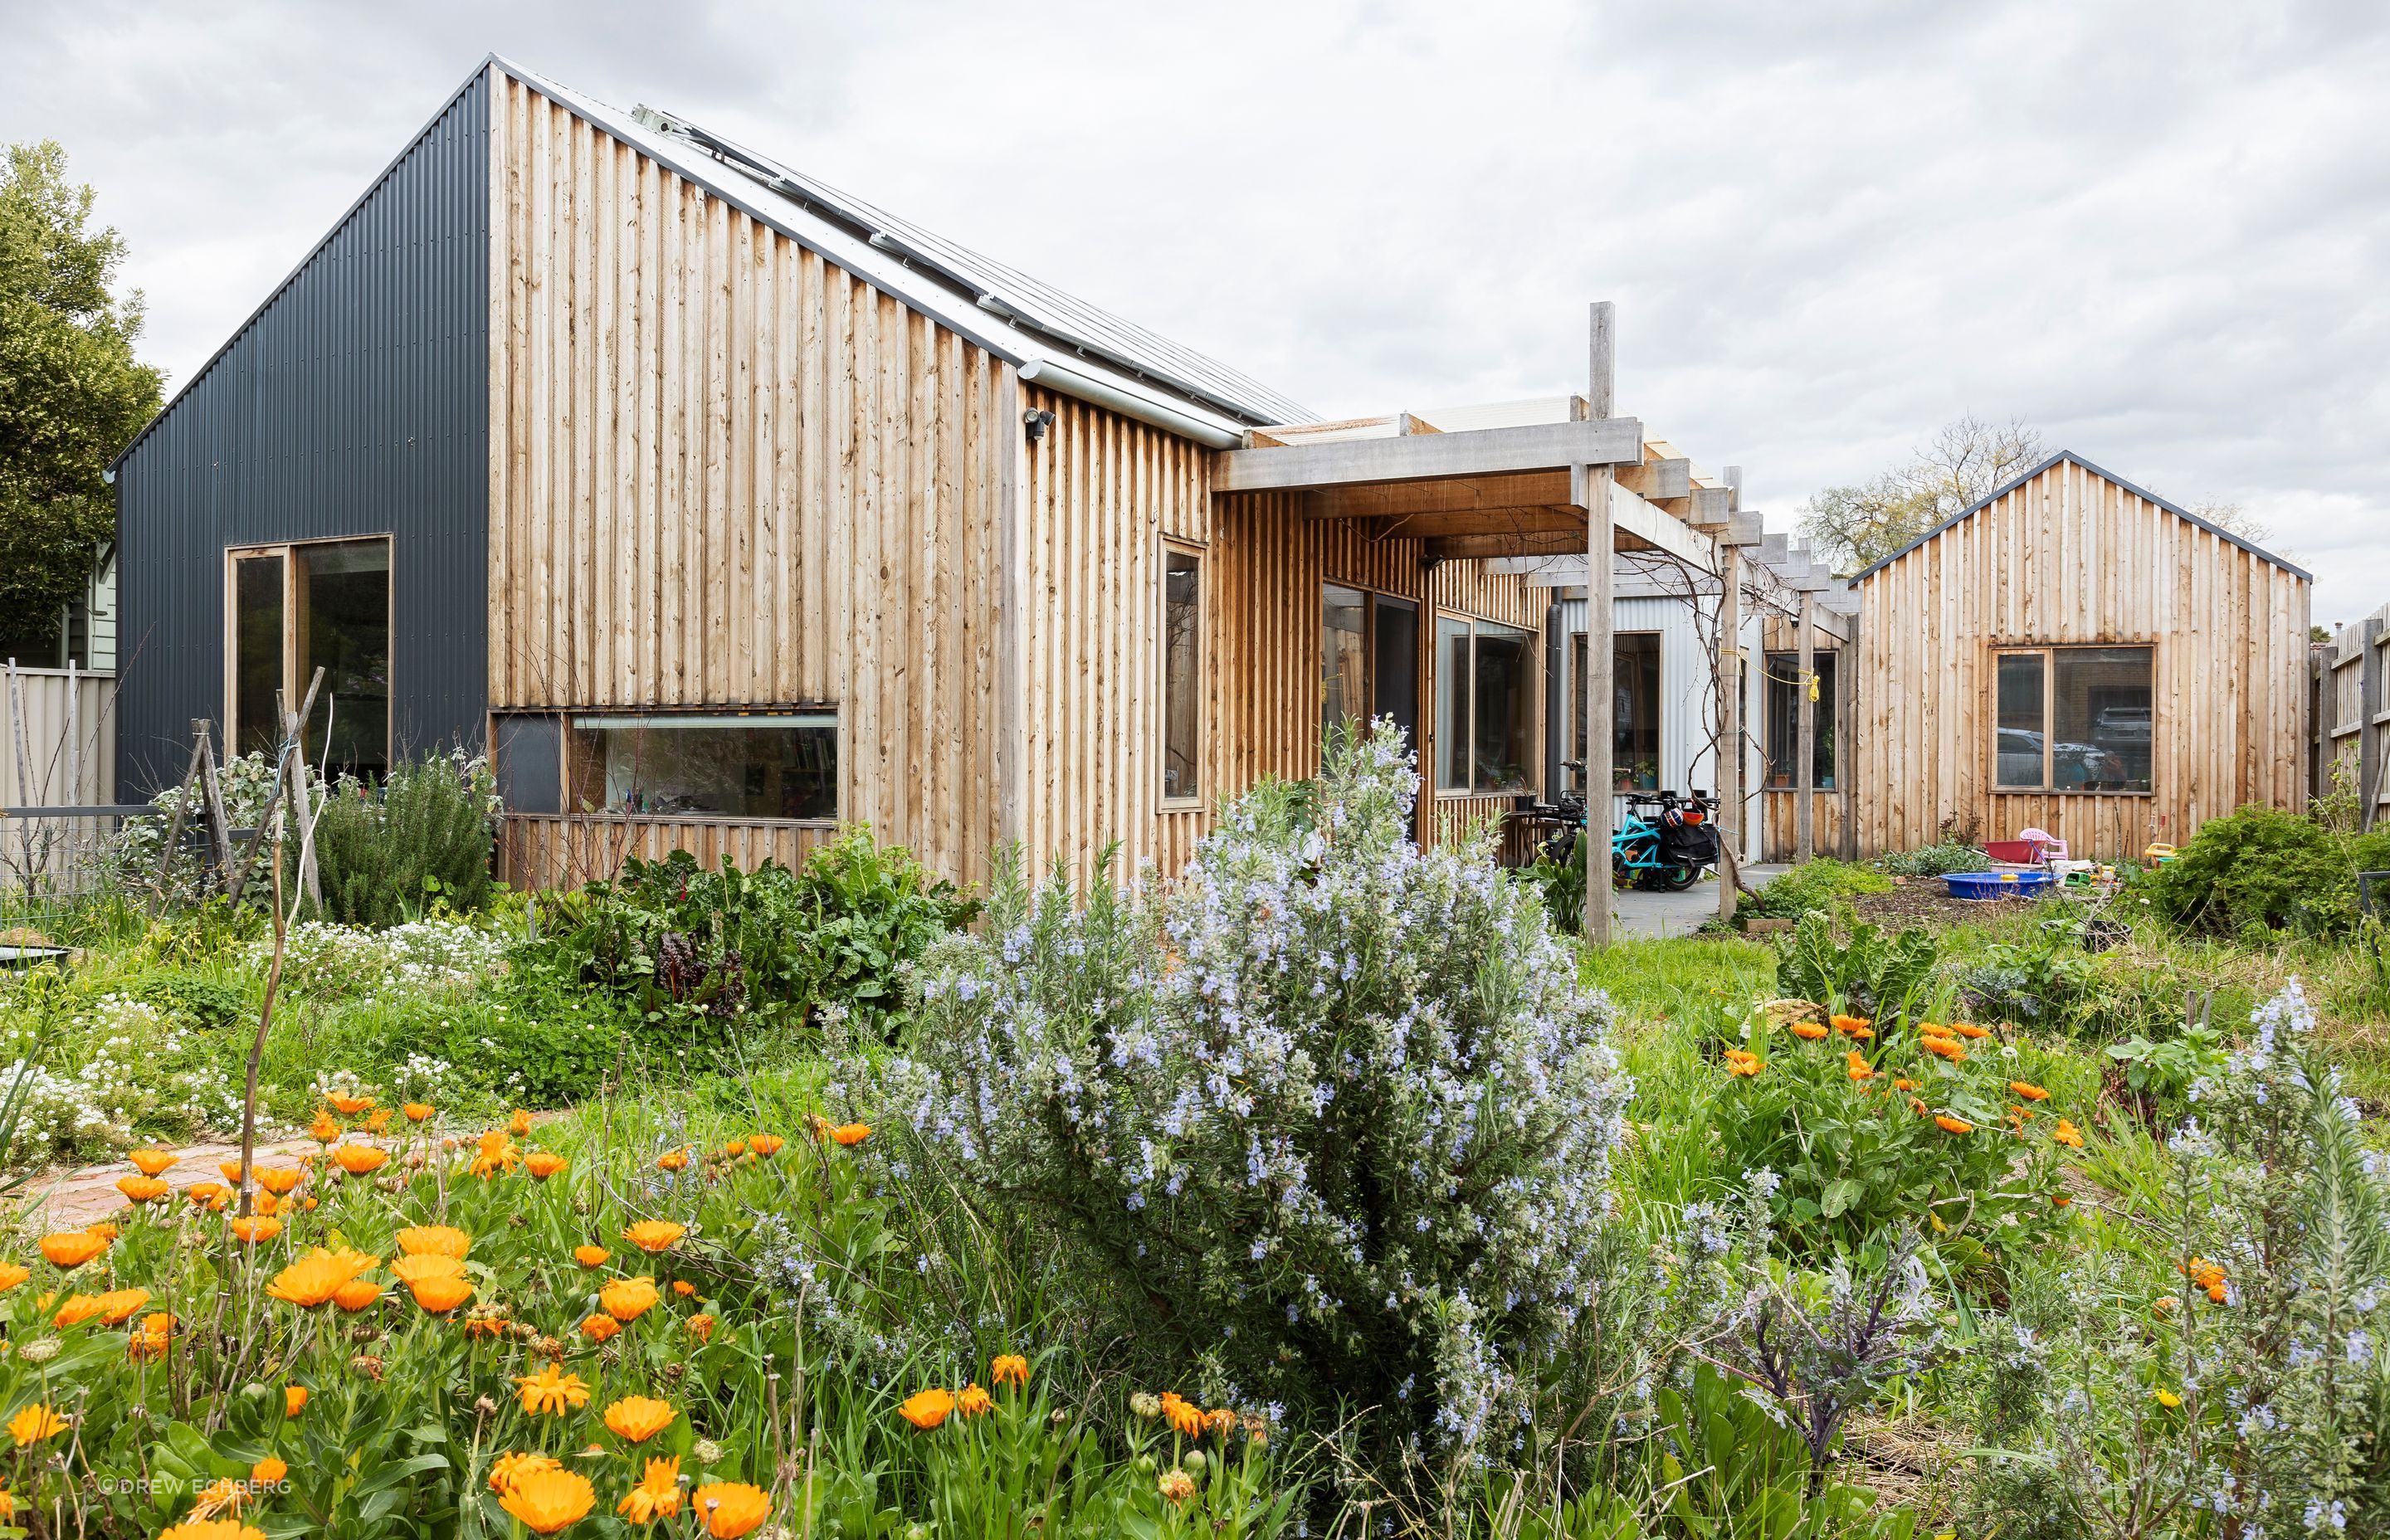 A new house designed around passive solar principles